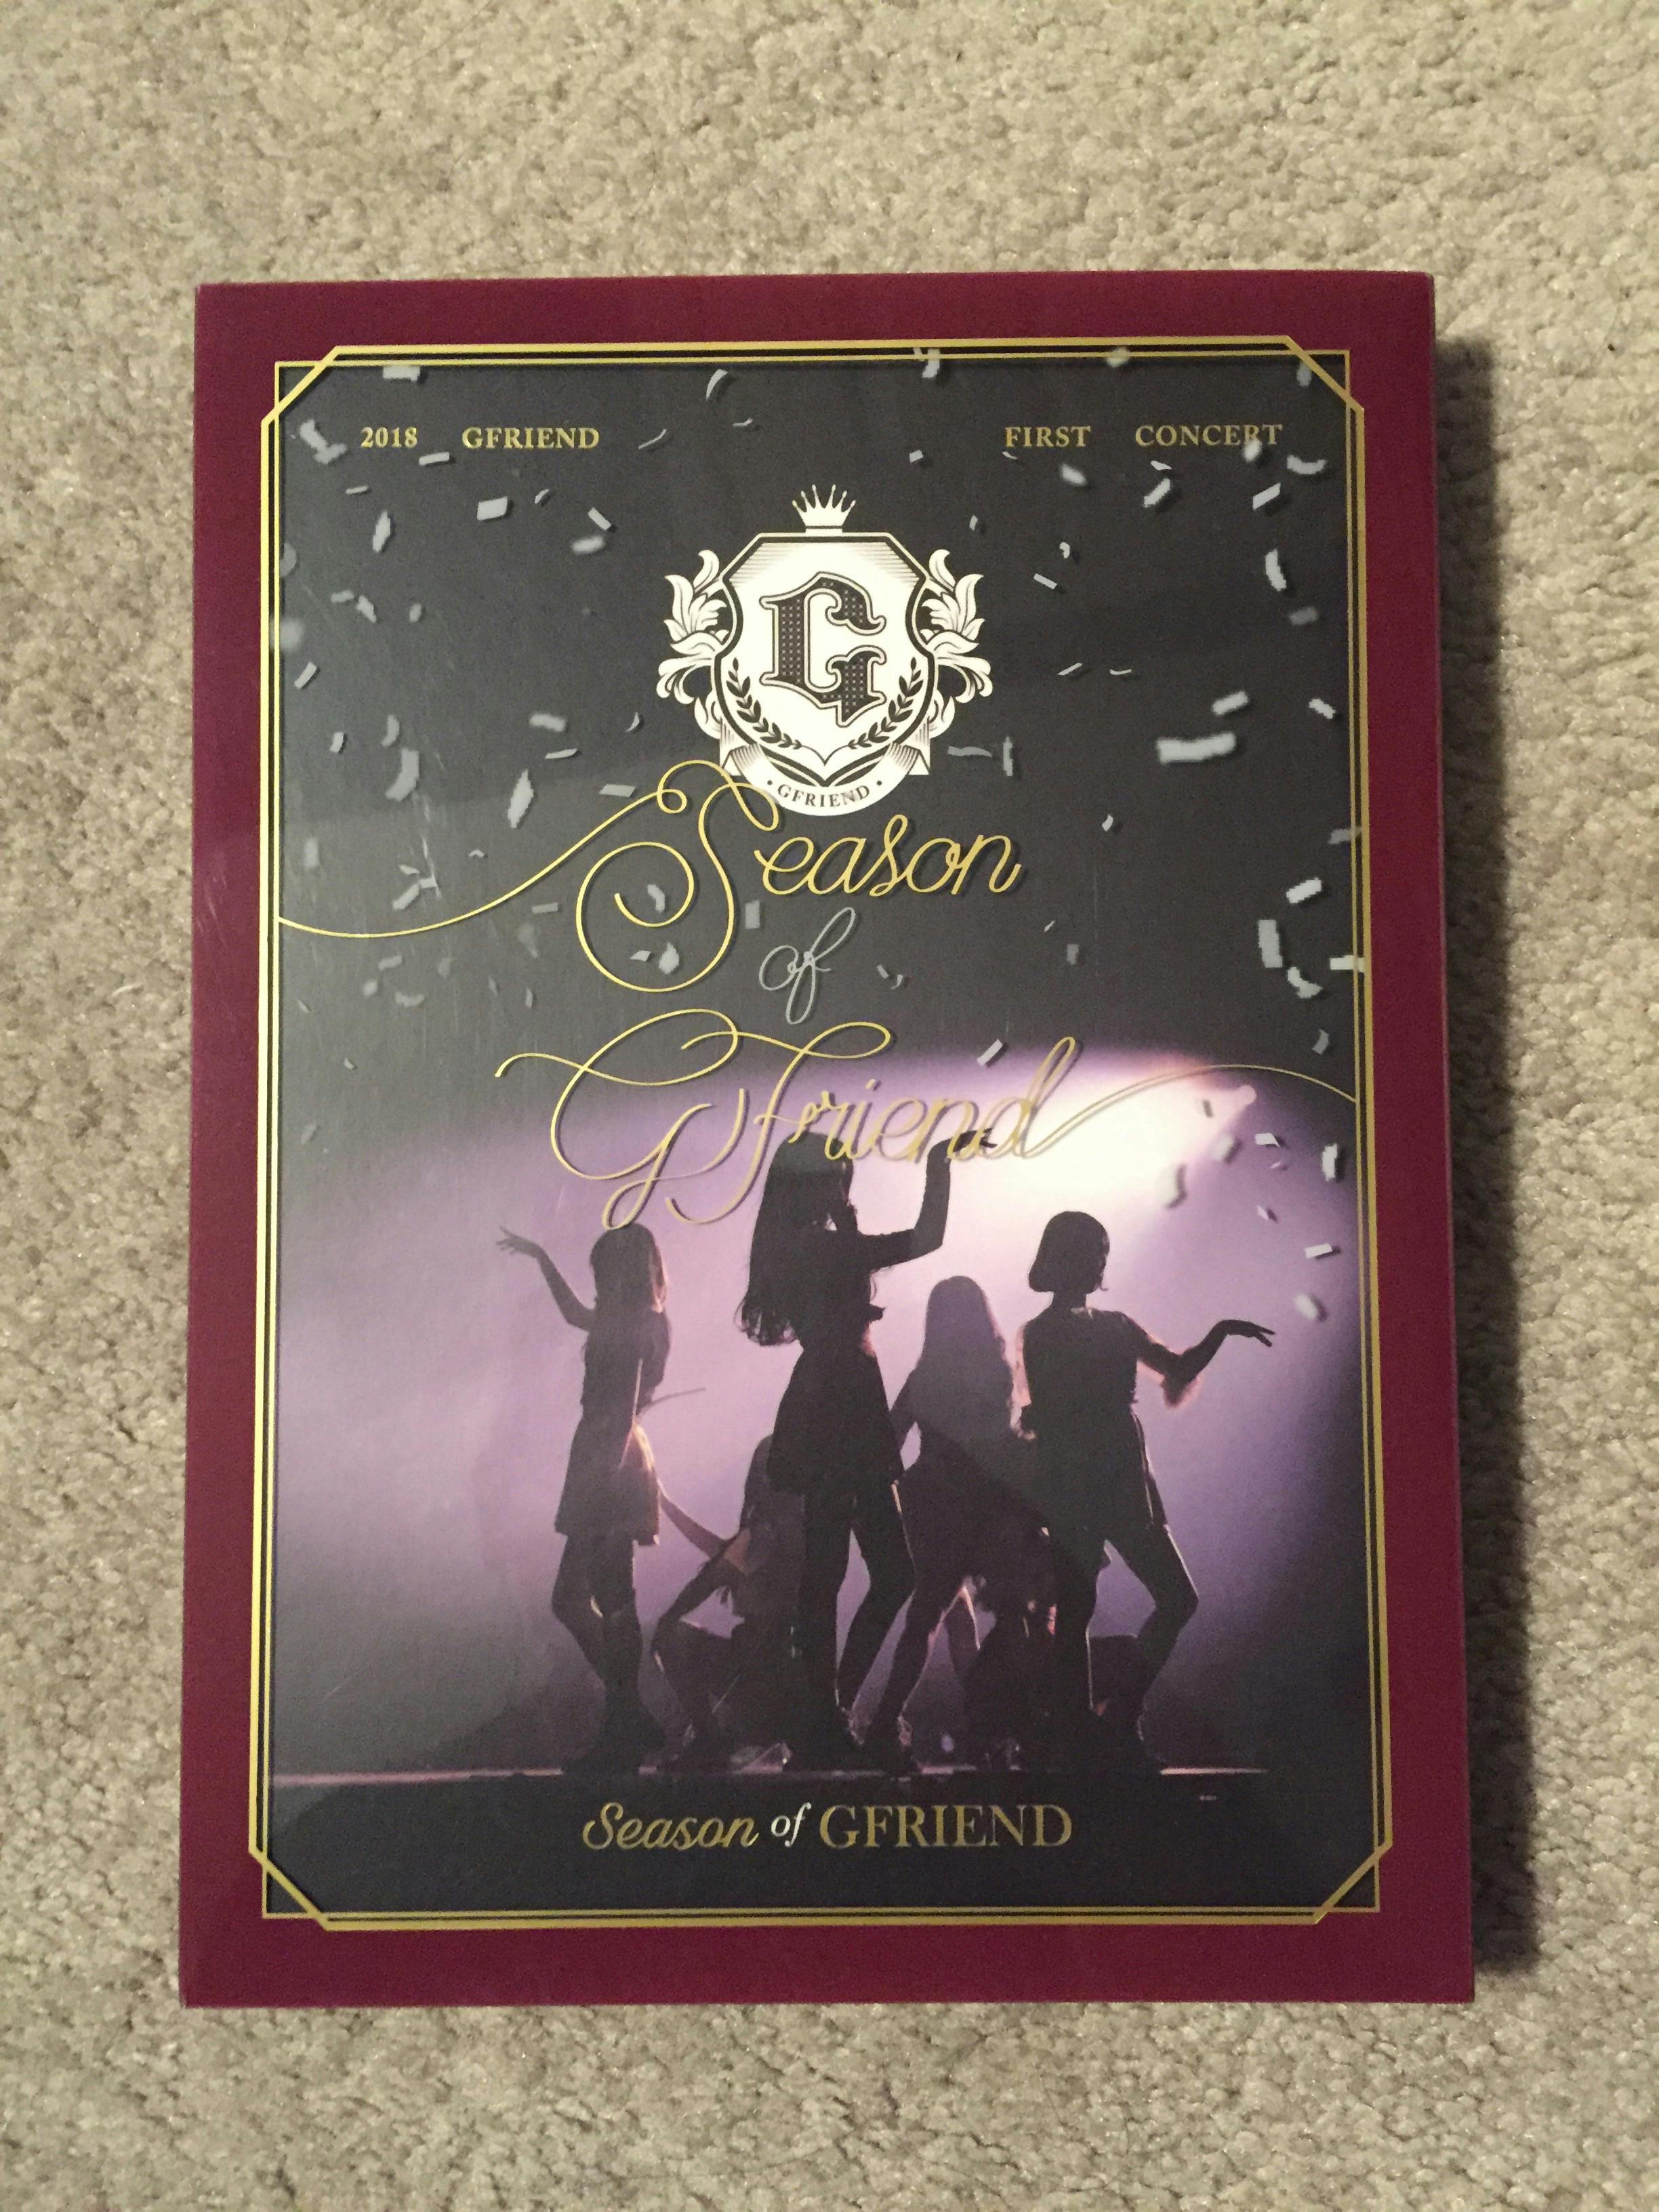 GFRIEND2018 GFRIEND FIRST CONCERT Blu-ray